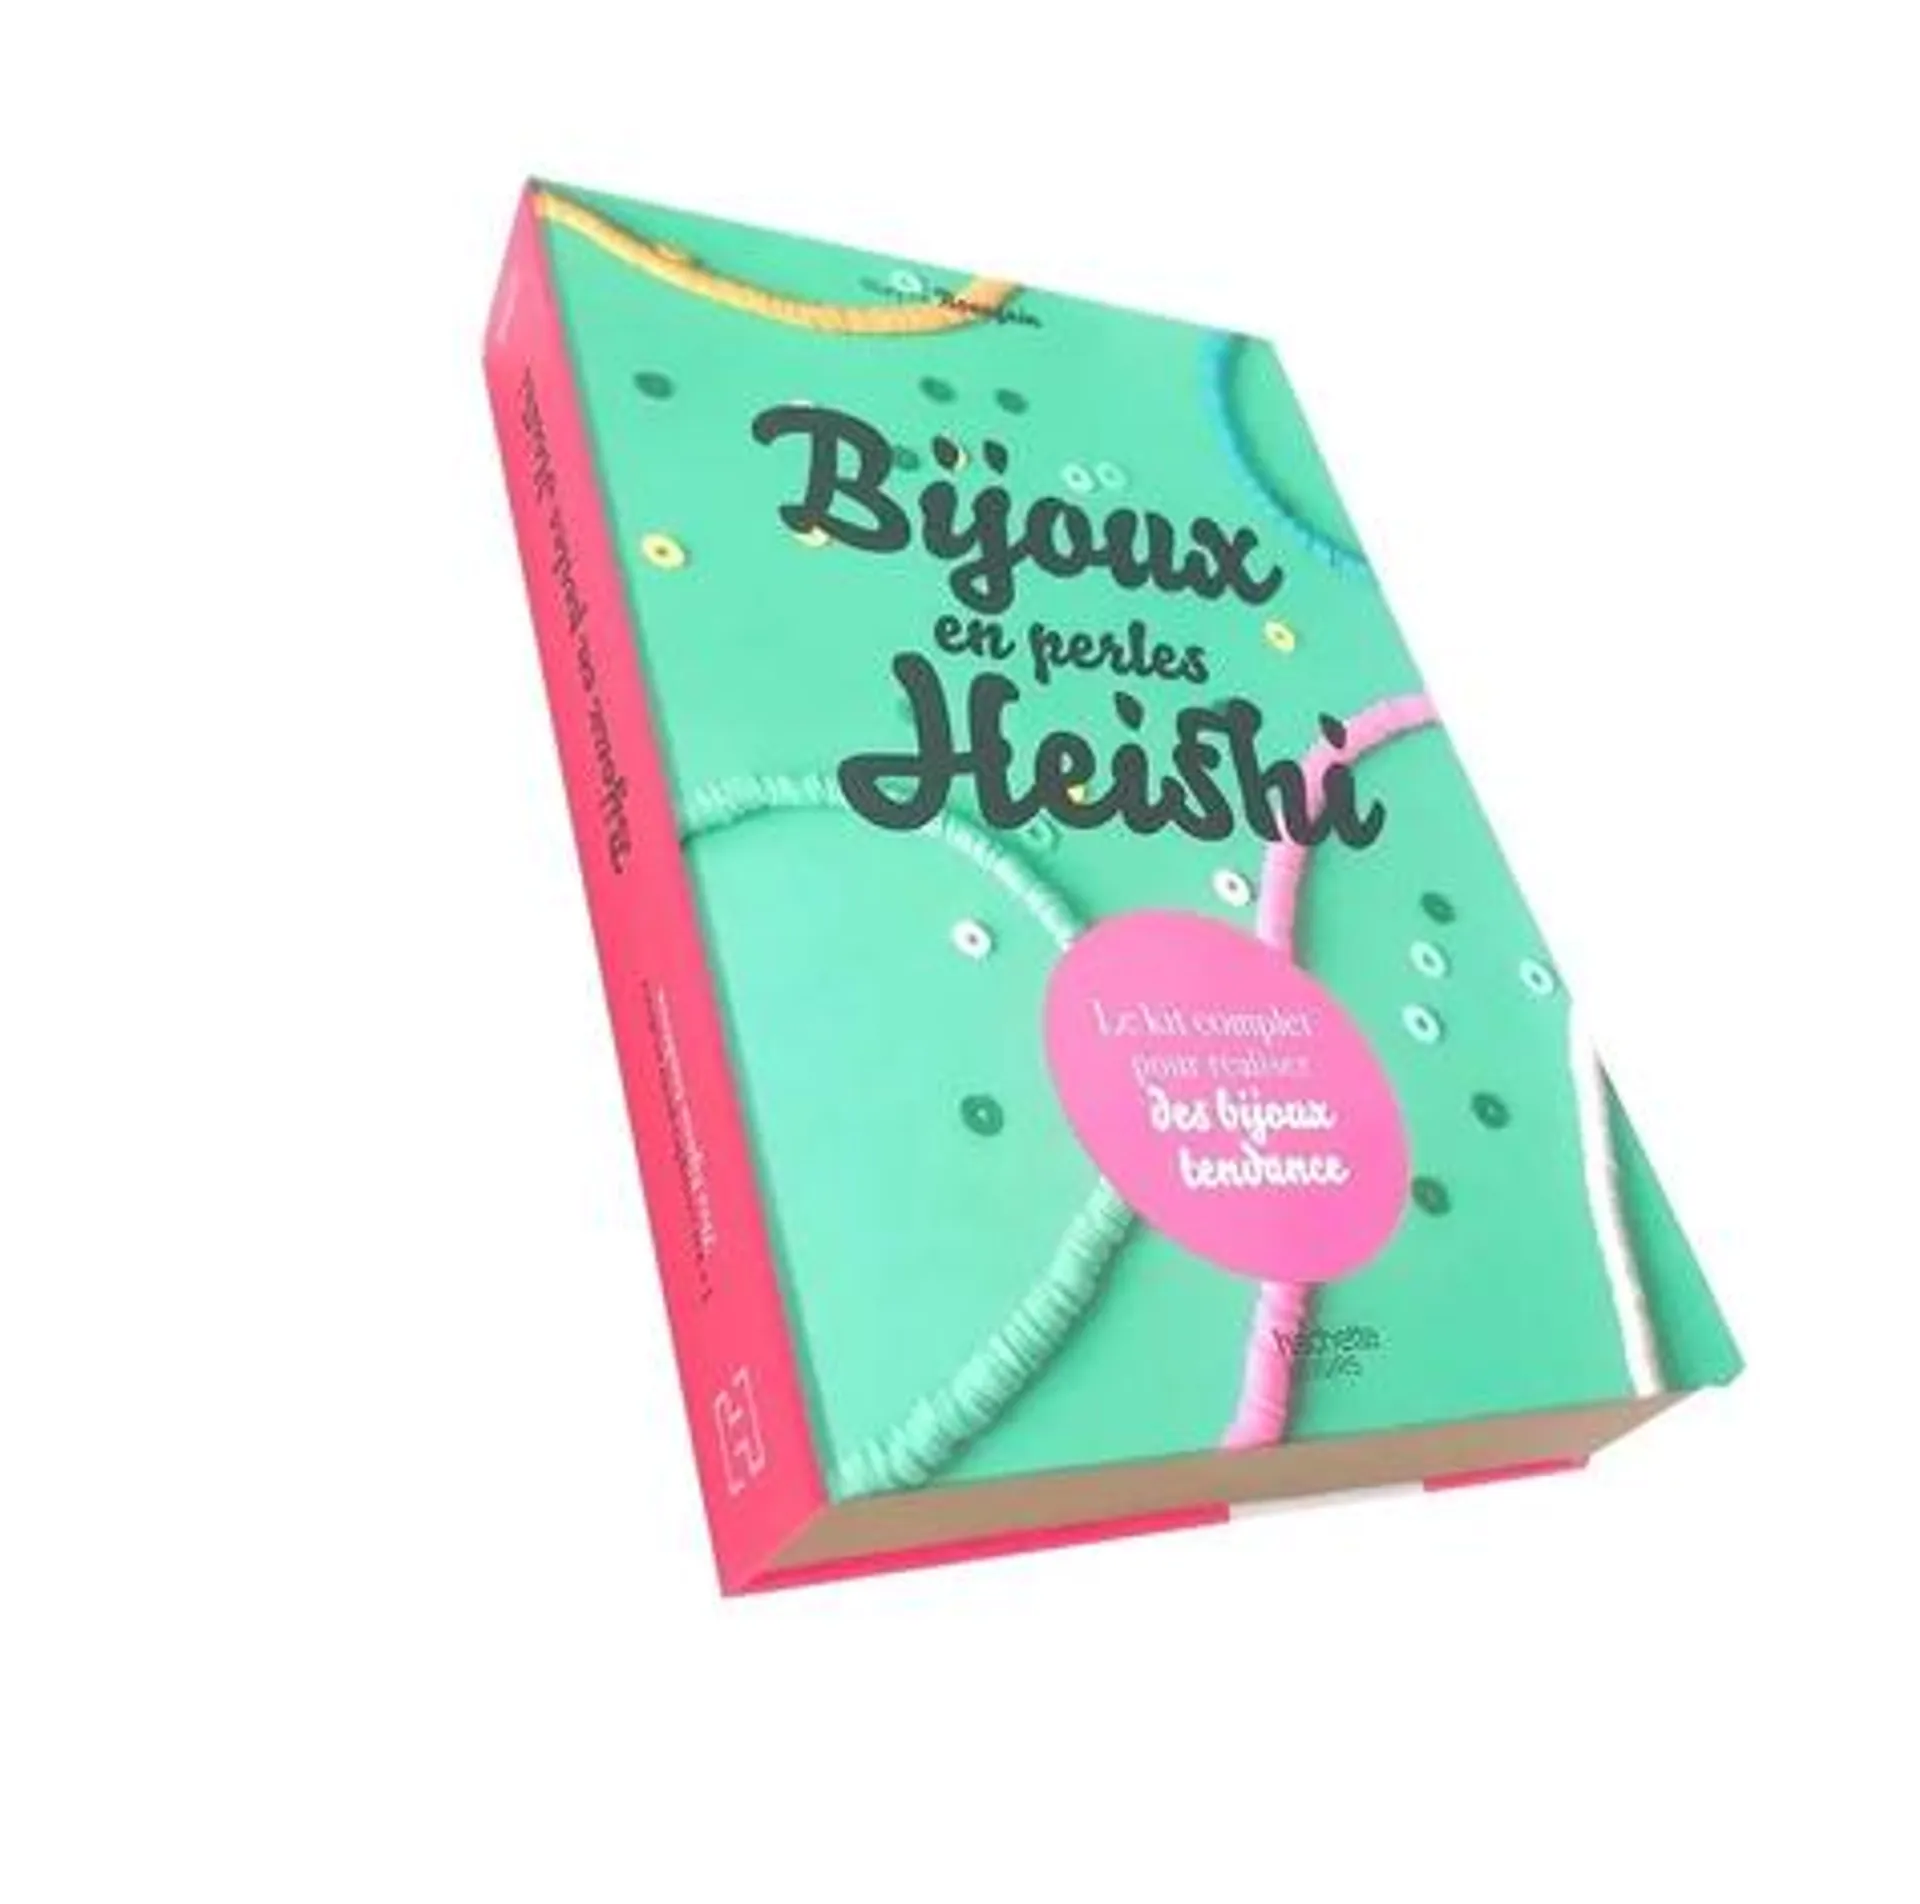 Coffret Bijoux en perles Heishi - Le livre avec 400 perles heishi, 4 m de fil de jade et 5 perles coquillage